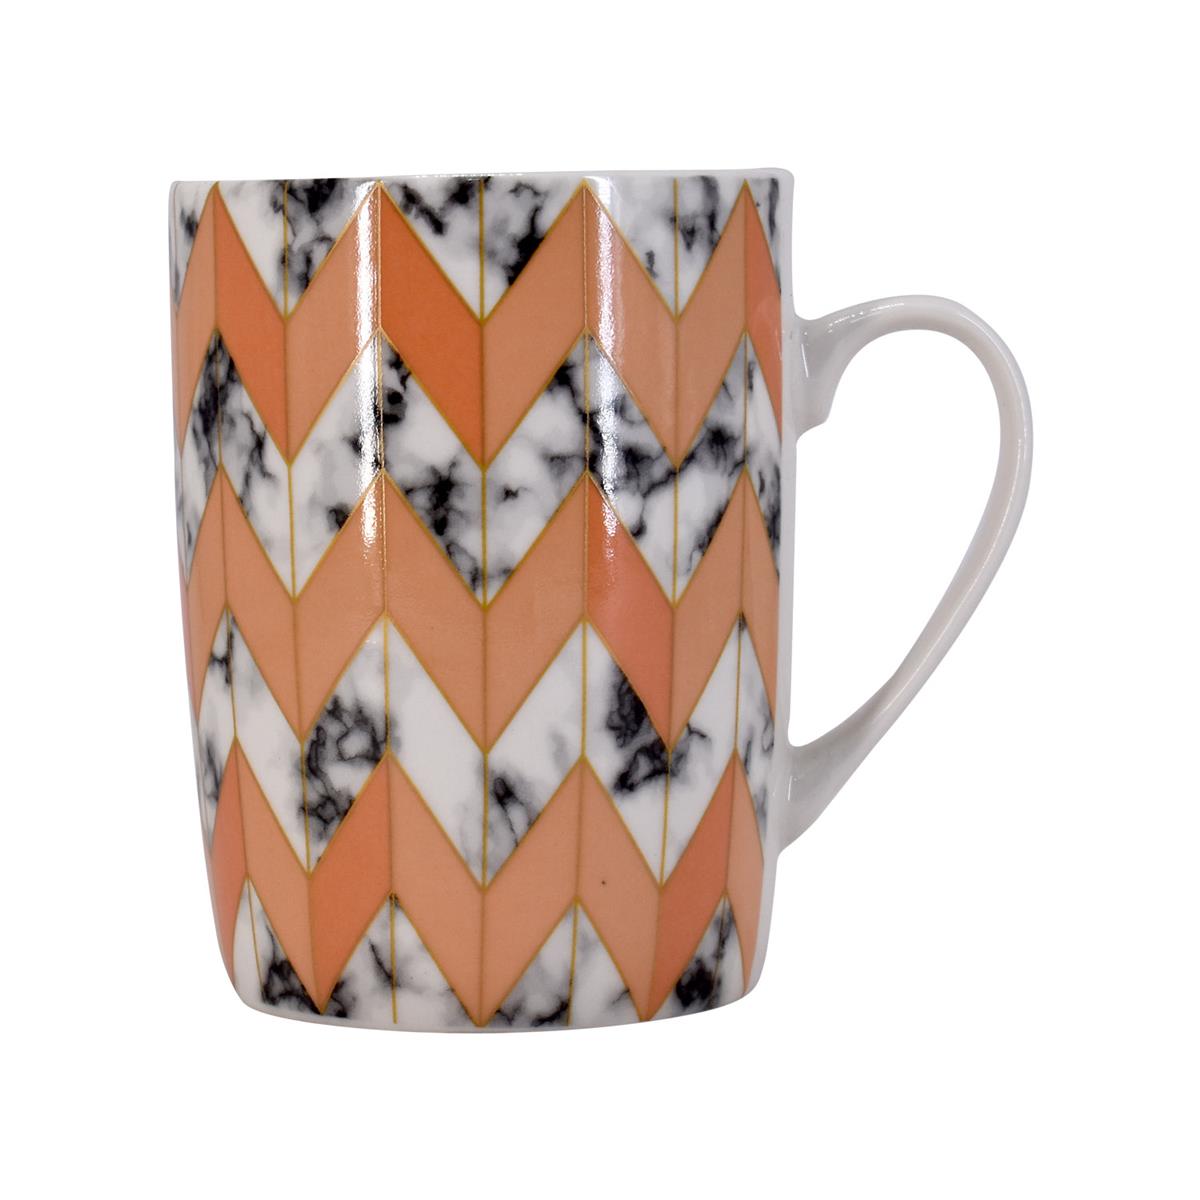 Printed Ceramic Tall Coffee or Tea Mug with handle - 325ml (R4760-B)